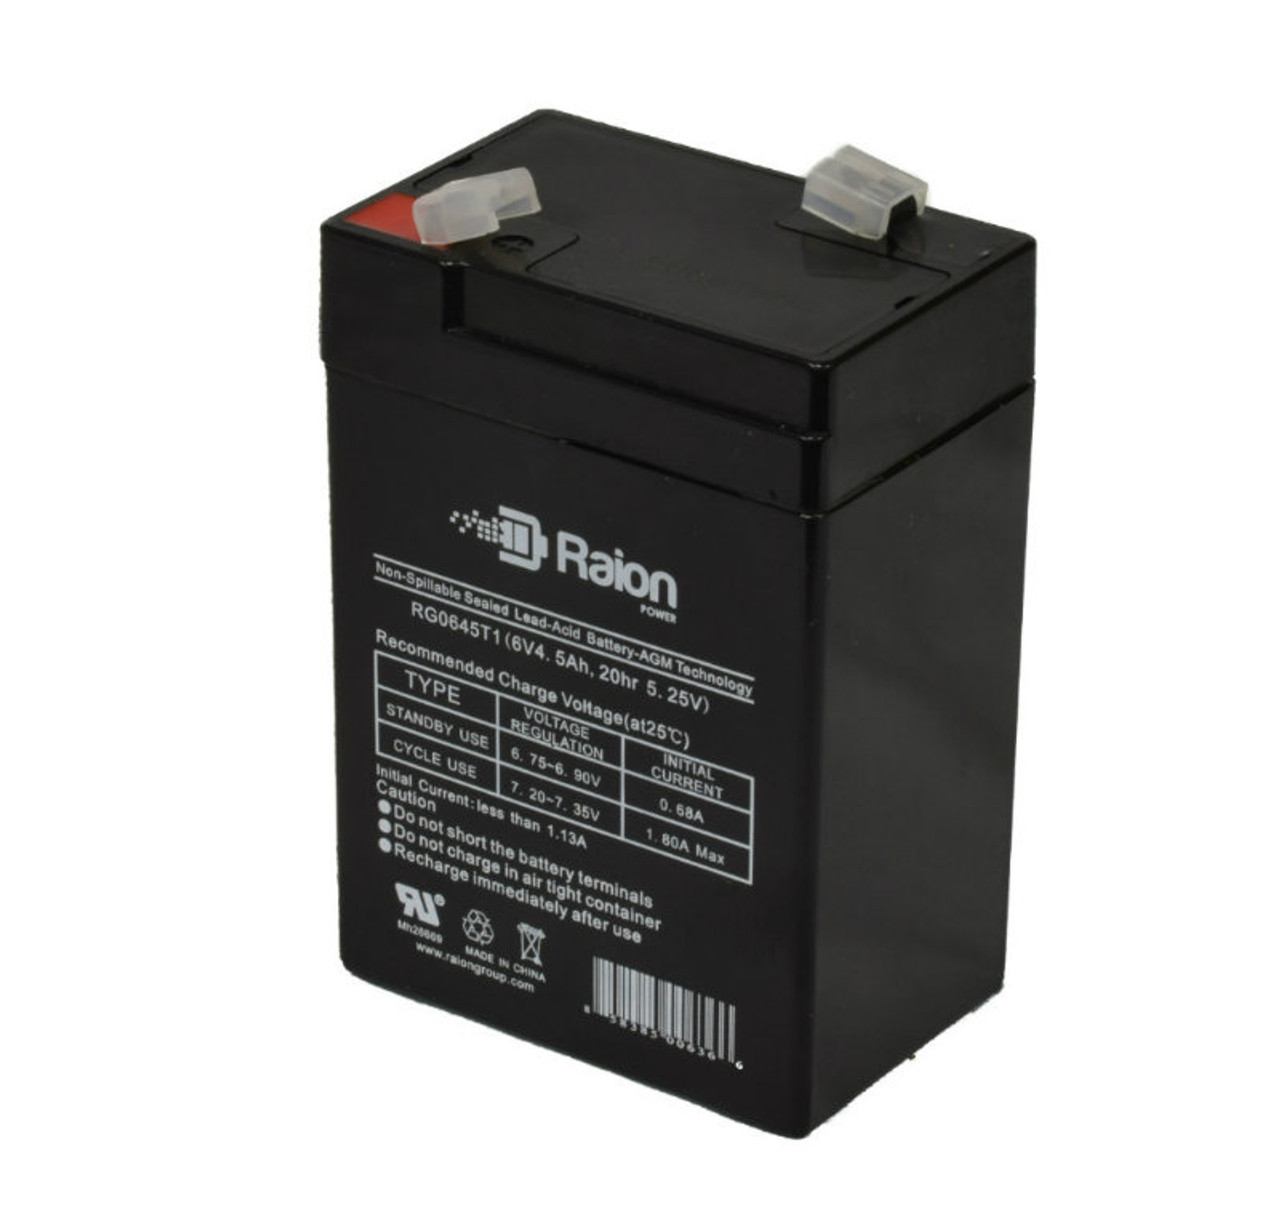 Raion Power RG0645T1 6V 4.5Ah Replacement Battery Cartridge for Sonnenschein A50642S